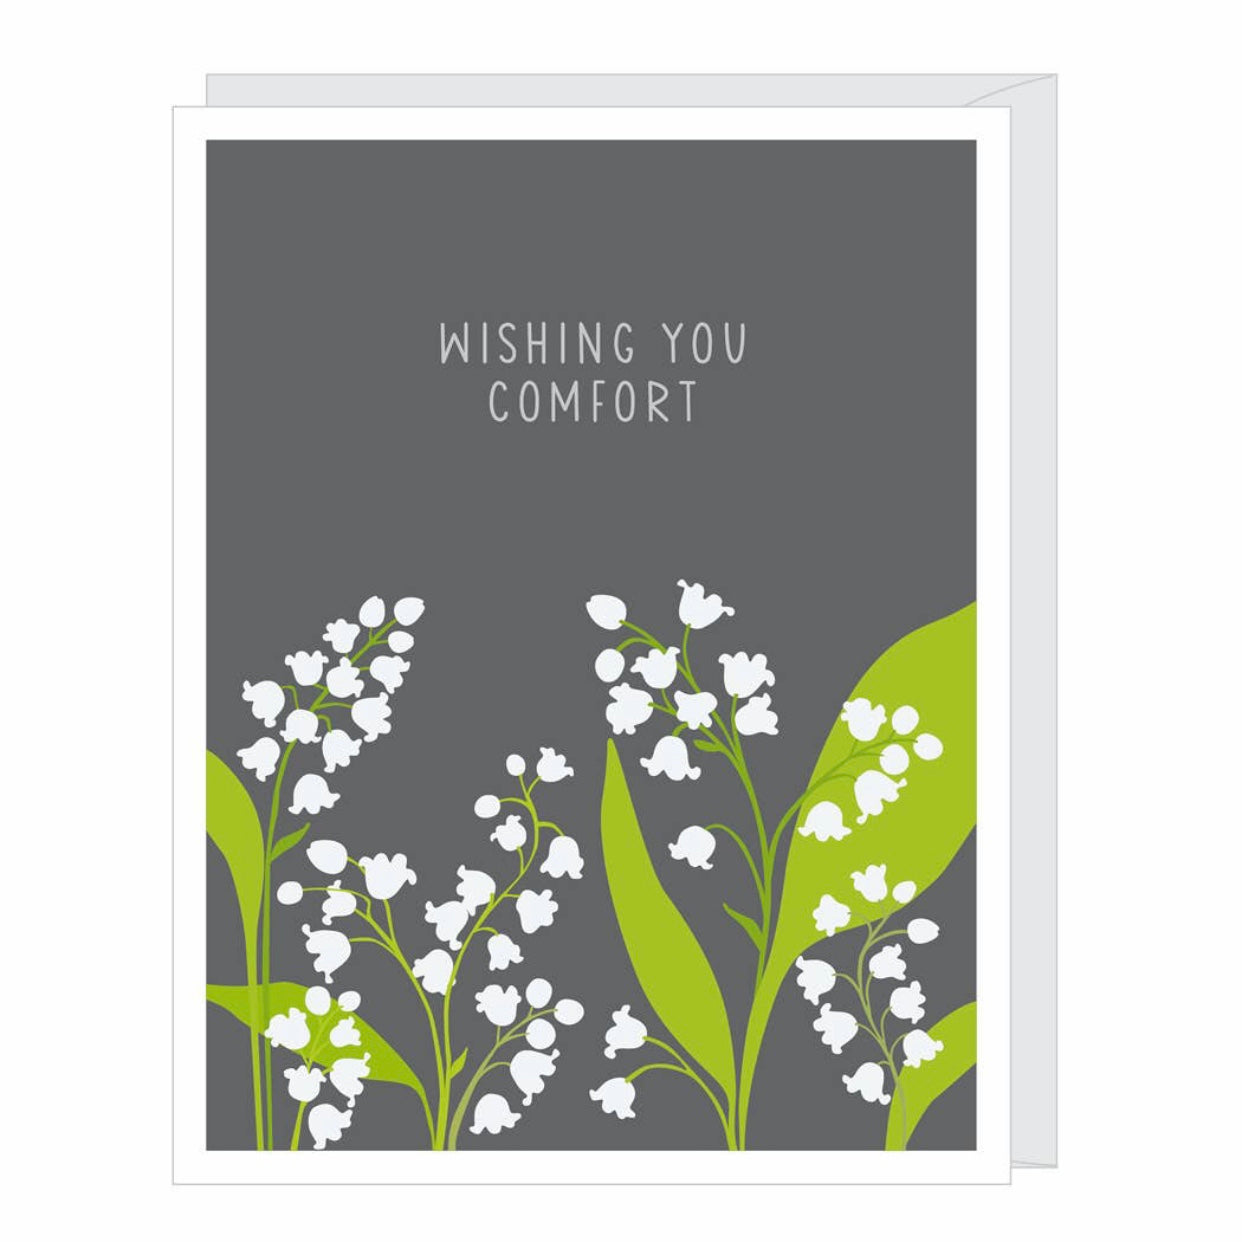 Wishing you comfort greeting card